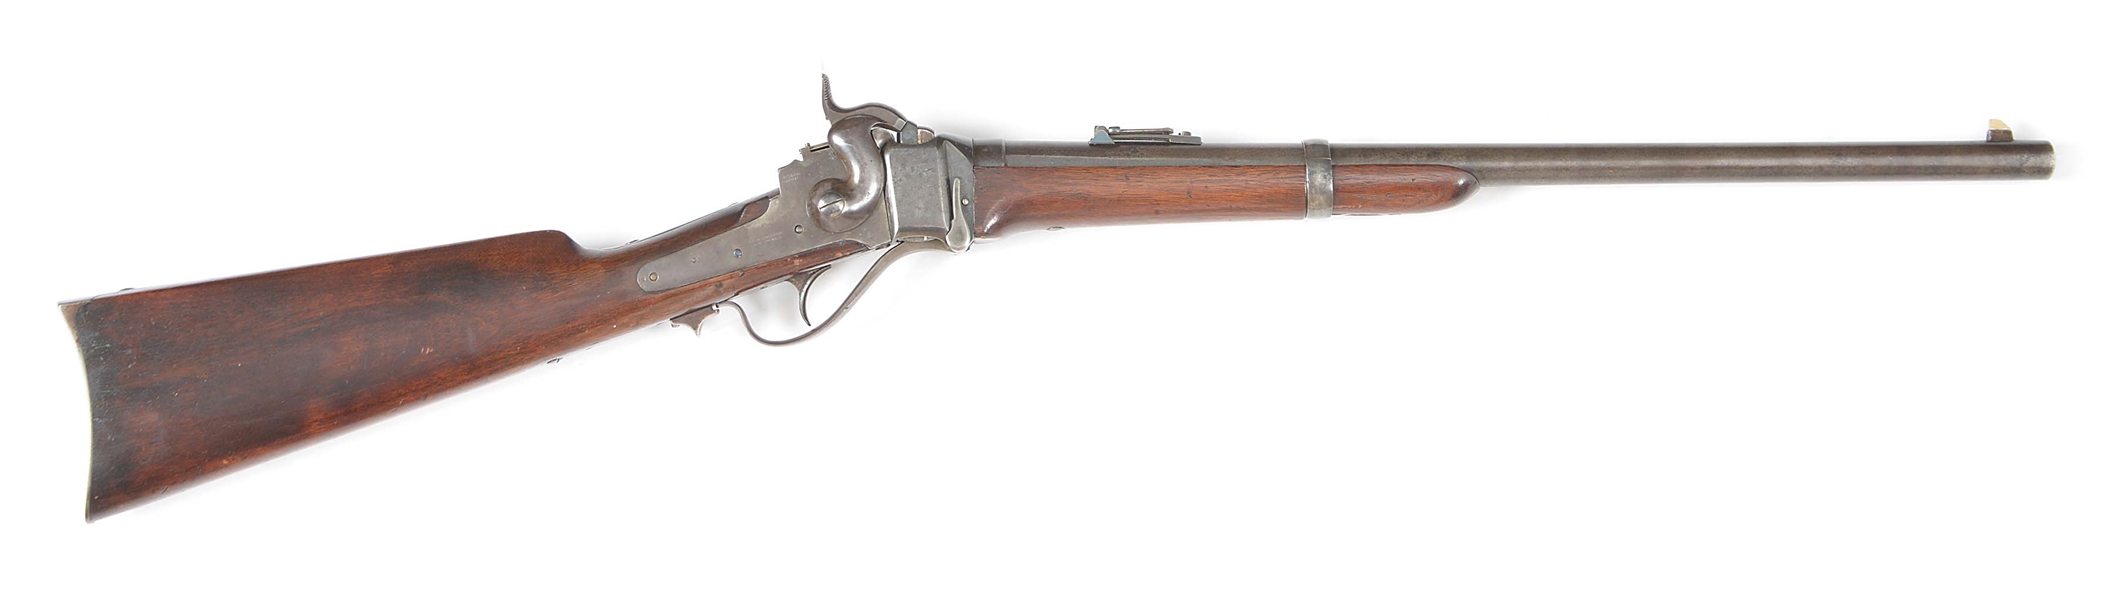 (A) SHARPS 1863 SINGLE SHOT RIFLE.